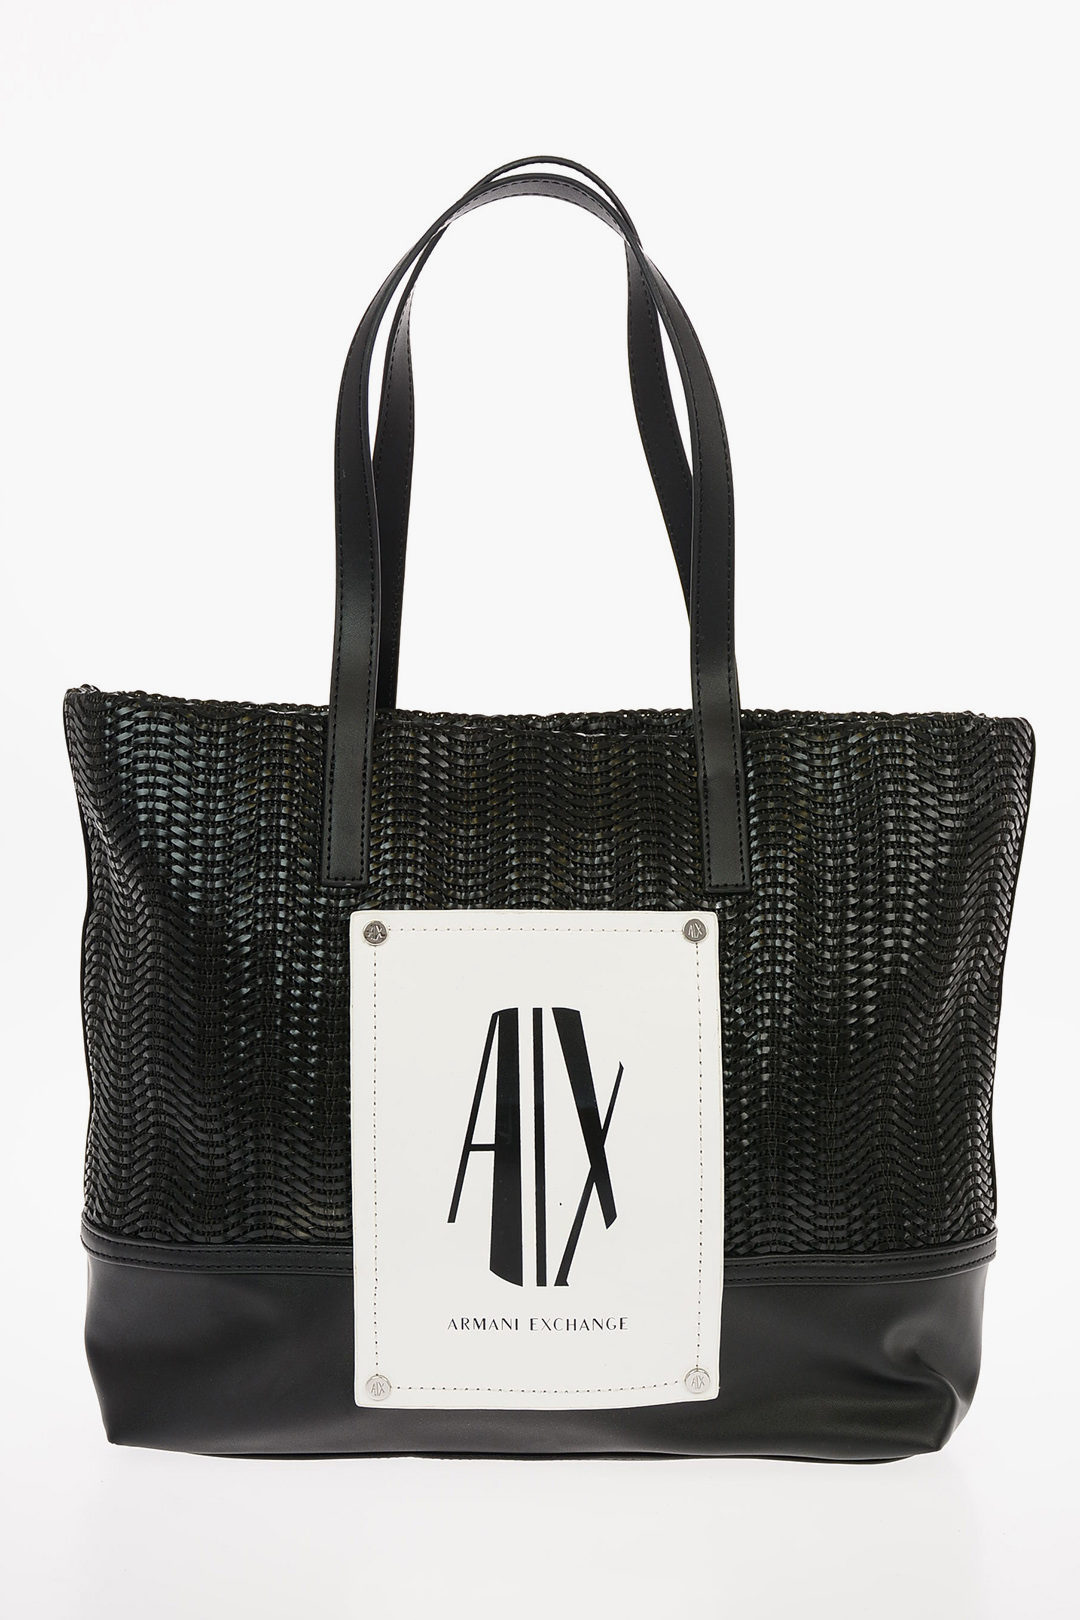 A/X Armani Exchange Gray Metal Mesh Purse Handbag - Momentum Vintage